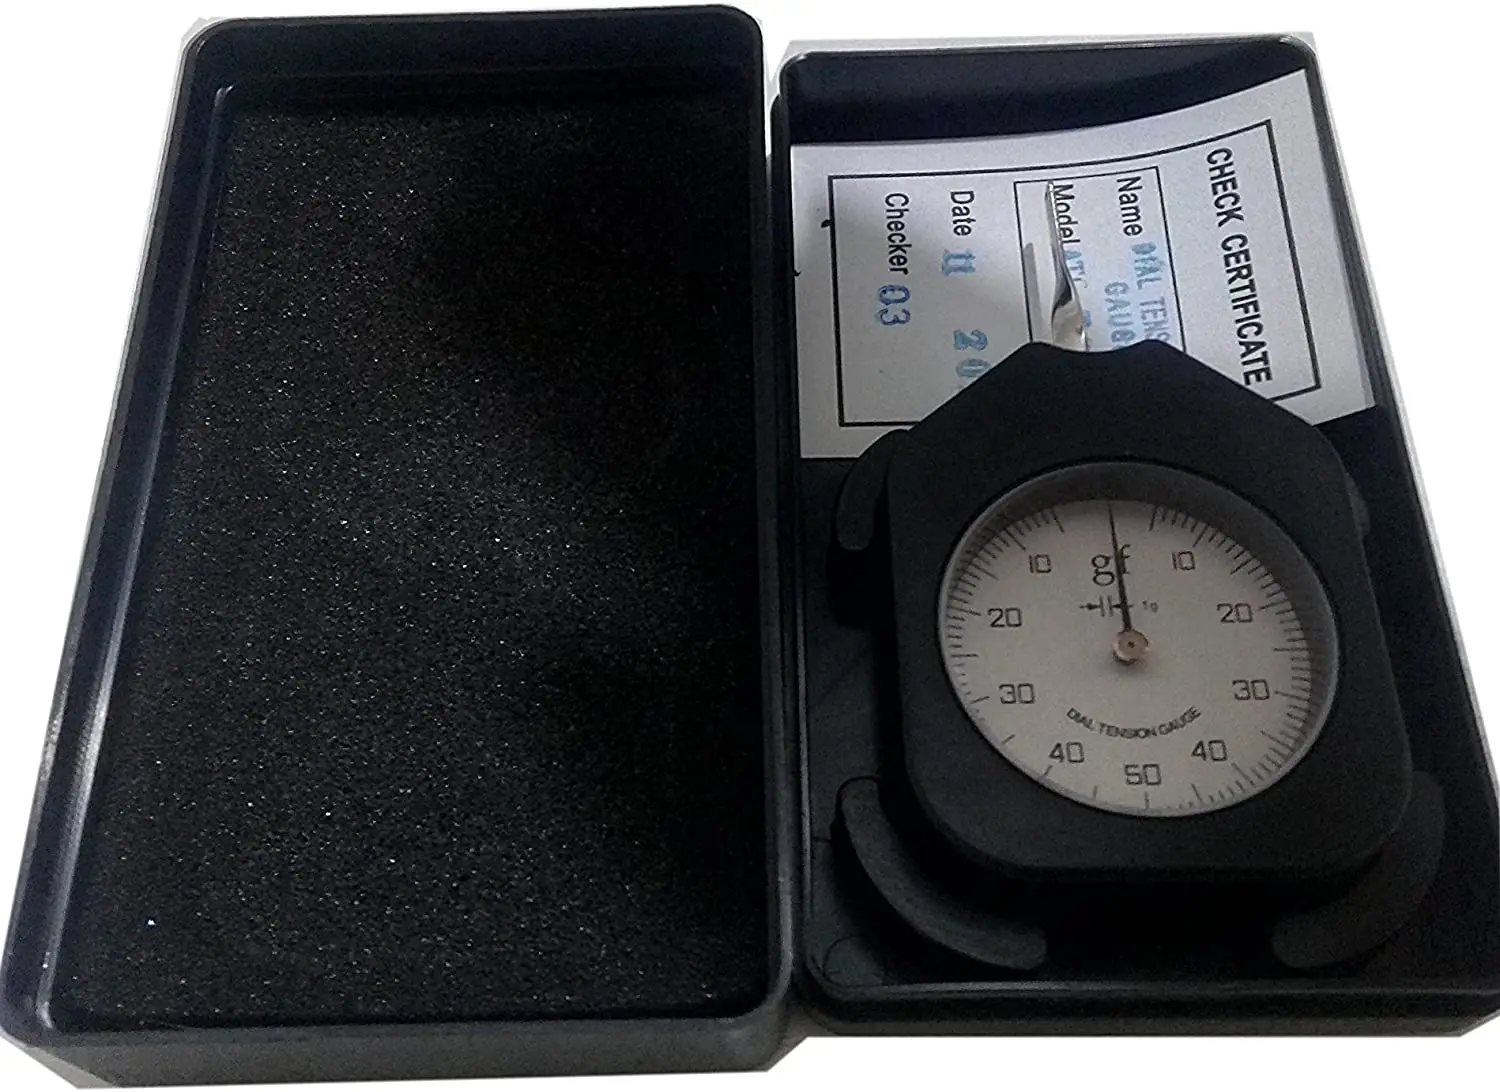 Handheld Tensionmeter Gauge Dial Tension Tester Meter Single Needle Type with Max Tension Measuring Value 150g